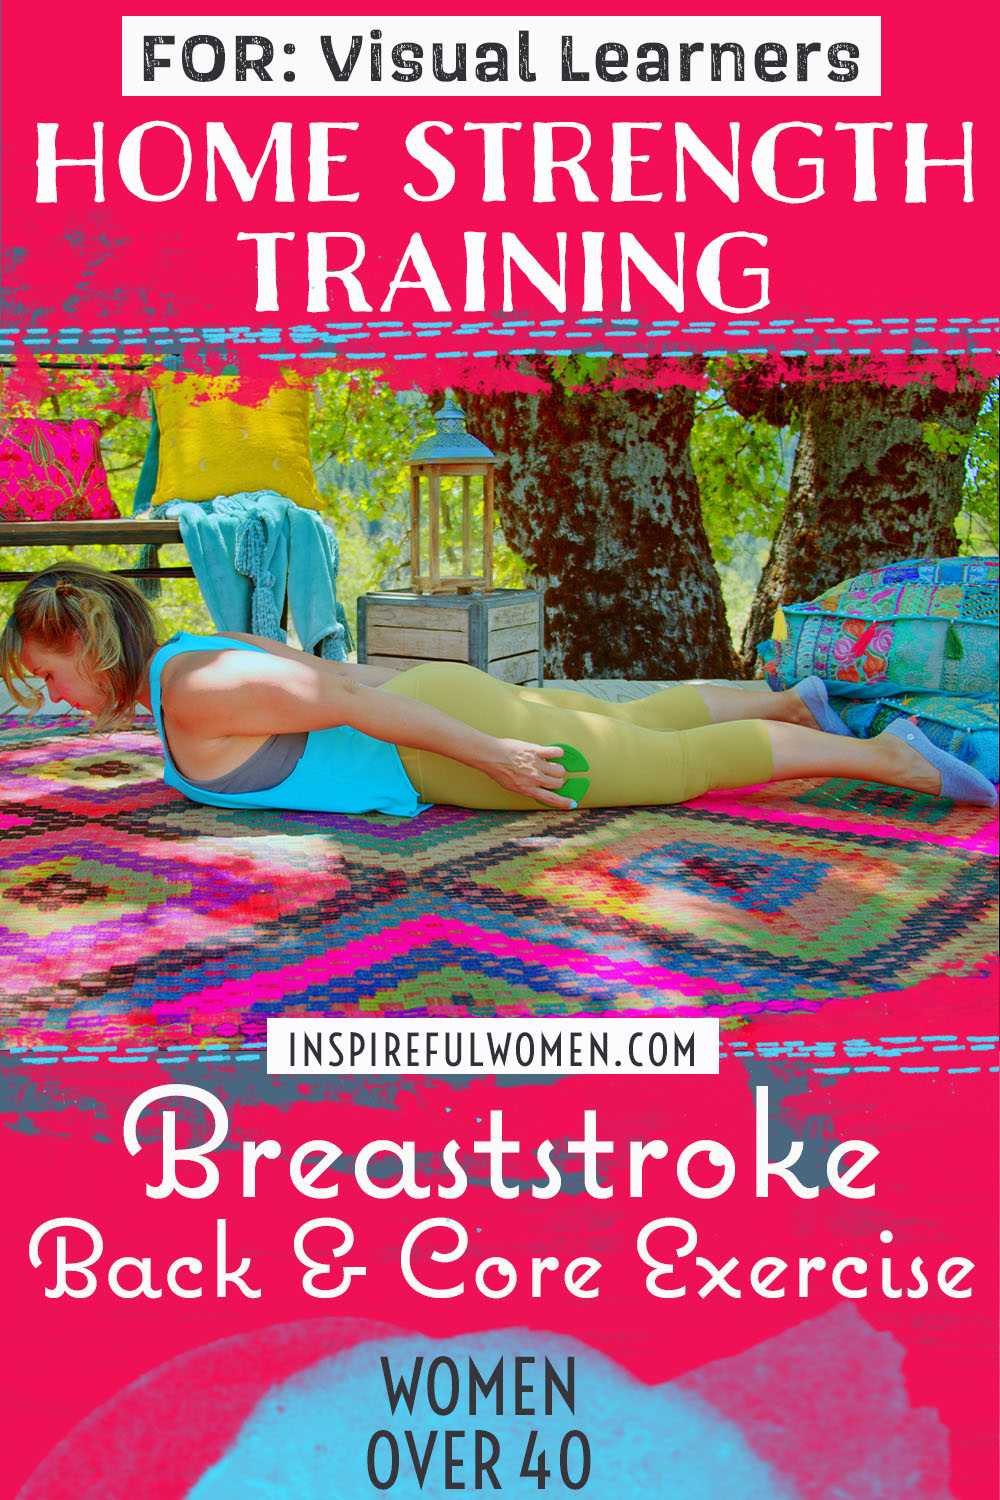 breaststroke-dumbbell-floor-pilates-core-exercise-thoracic-erector-spinae-women-40-plus